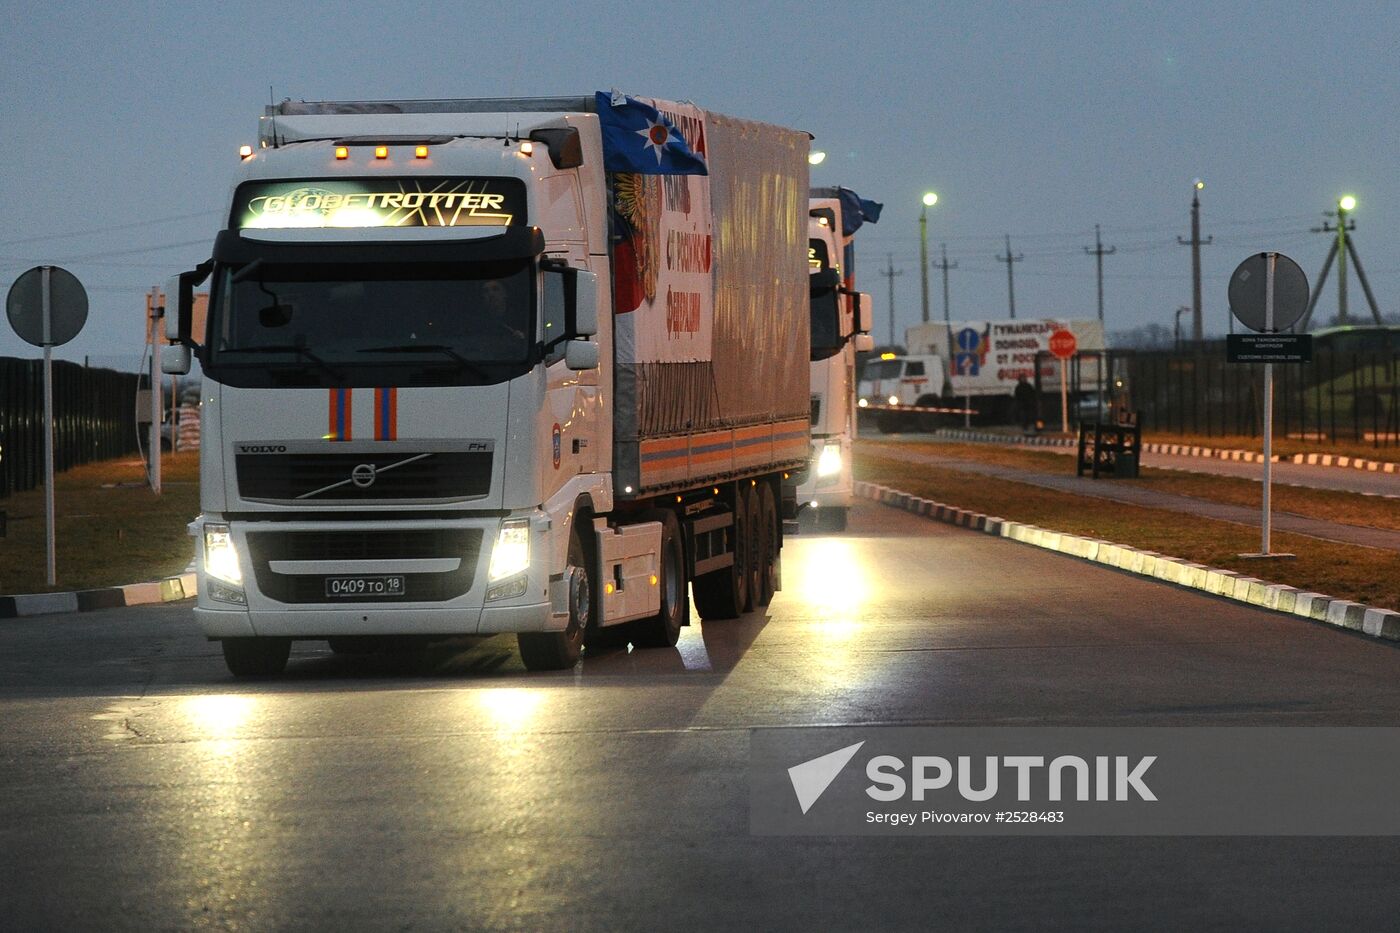 Seventh Russian humanitarian aid convoy departs to Donbas